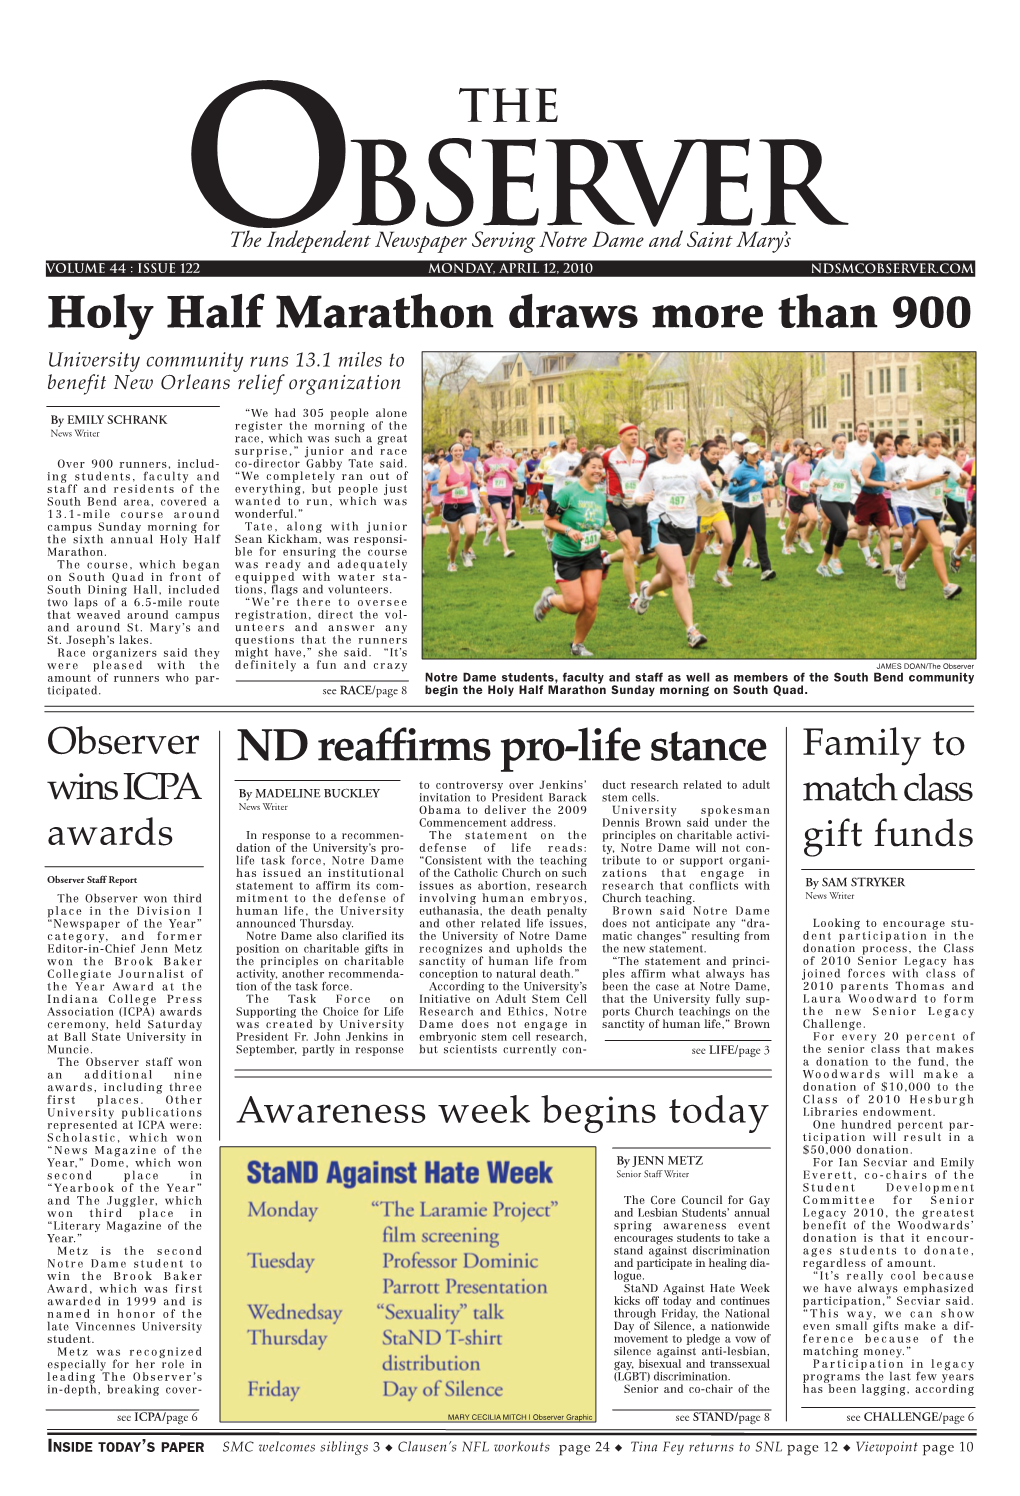 Holy Half Marathon Draws More Than 900 ND Reaffirms Pro-Life Stance